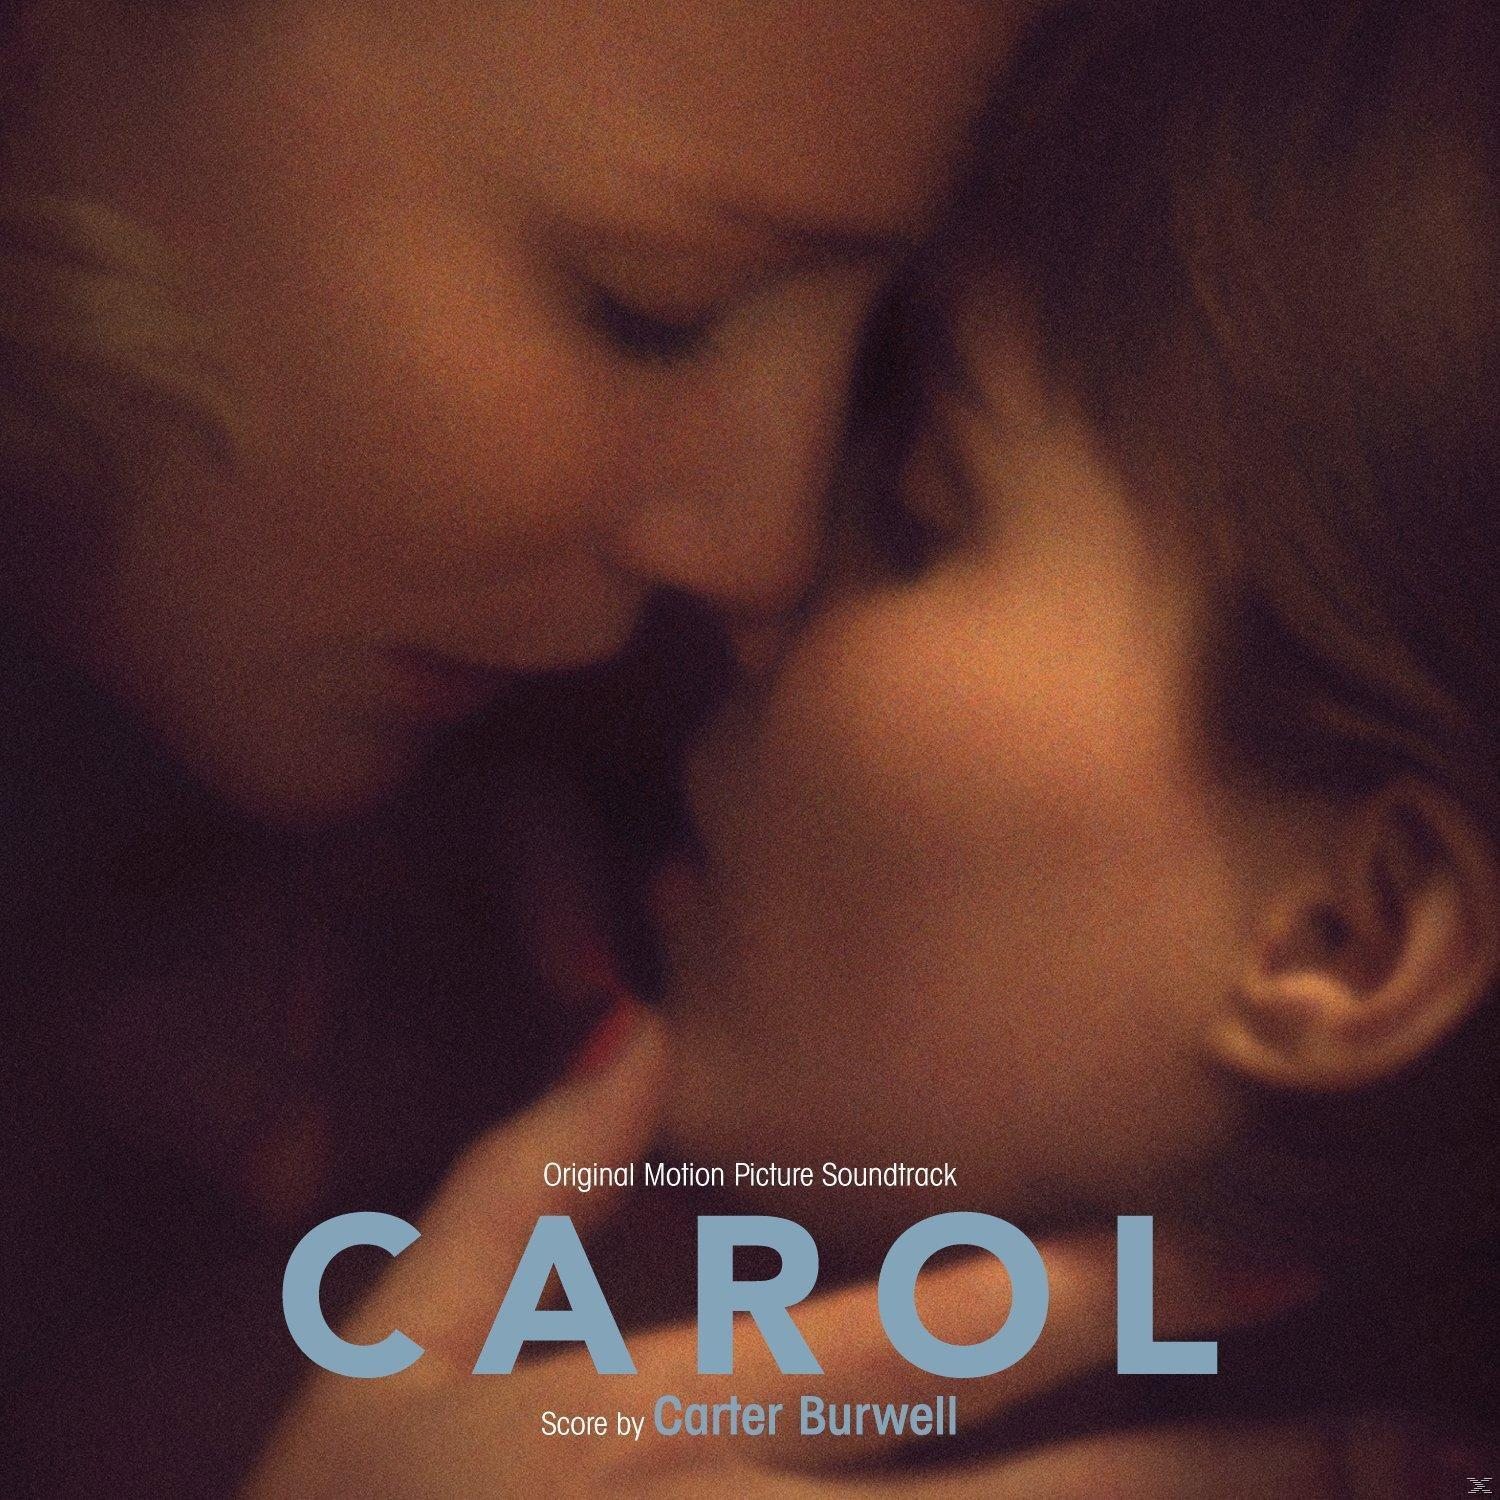 VARIOUS - Motion Soundtrack - Picture Carol-Original (CD)